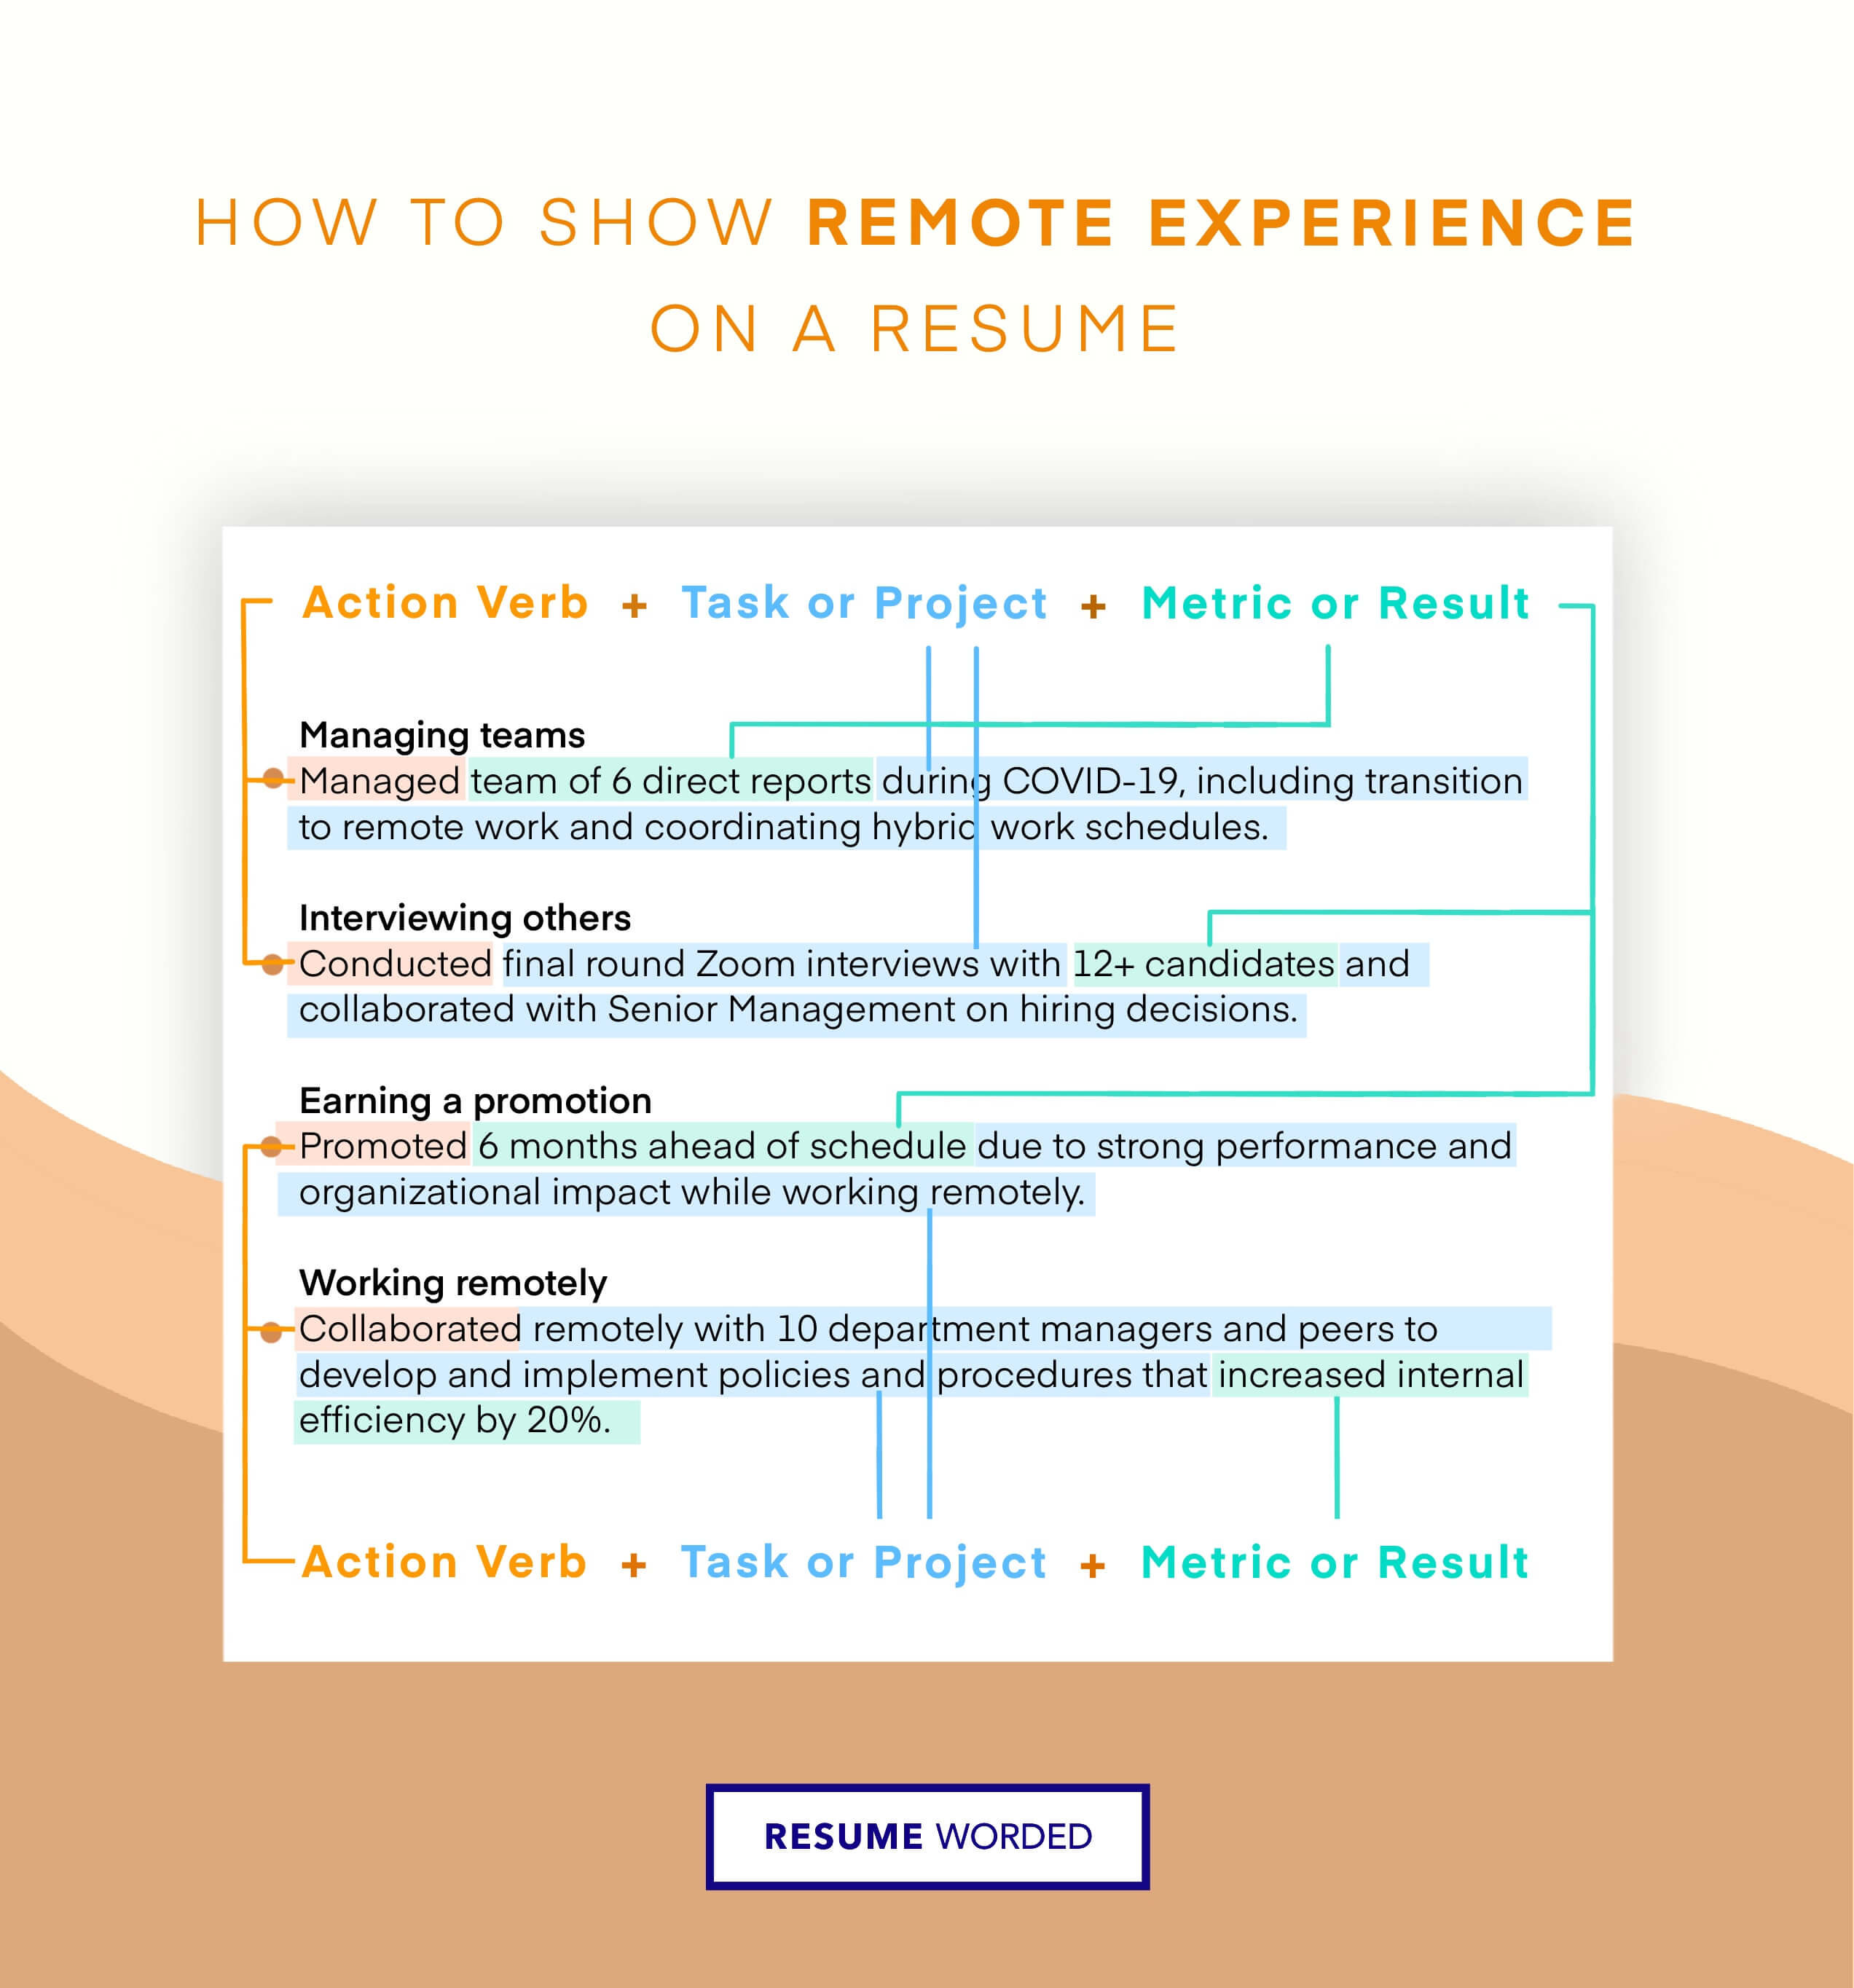 Display remote troubleshooting skills - Desktop Support Engineer CV